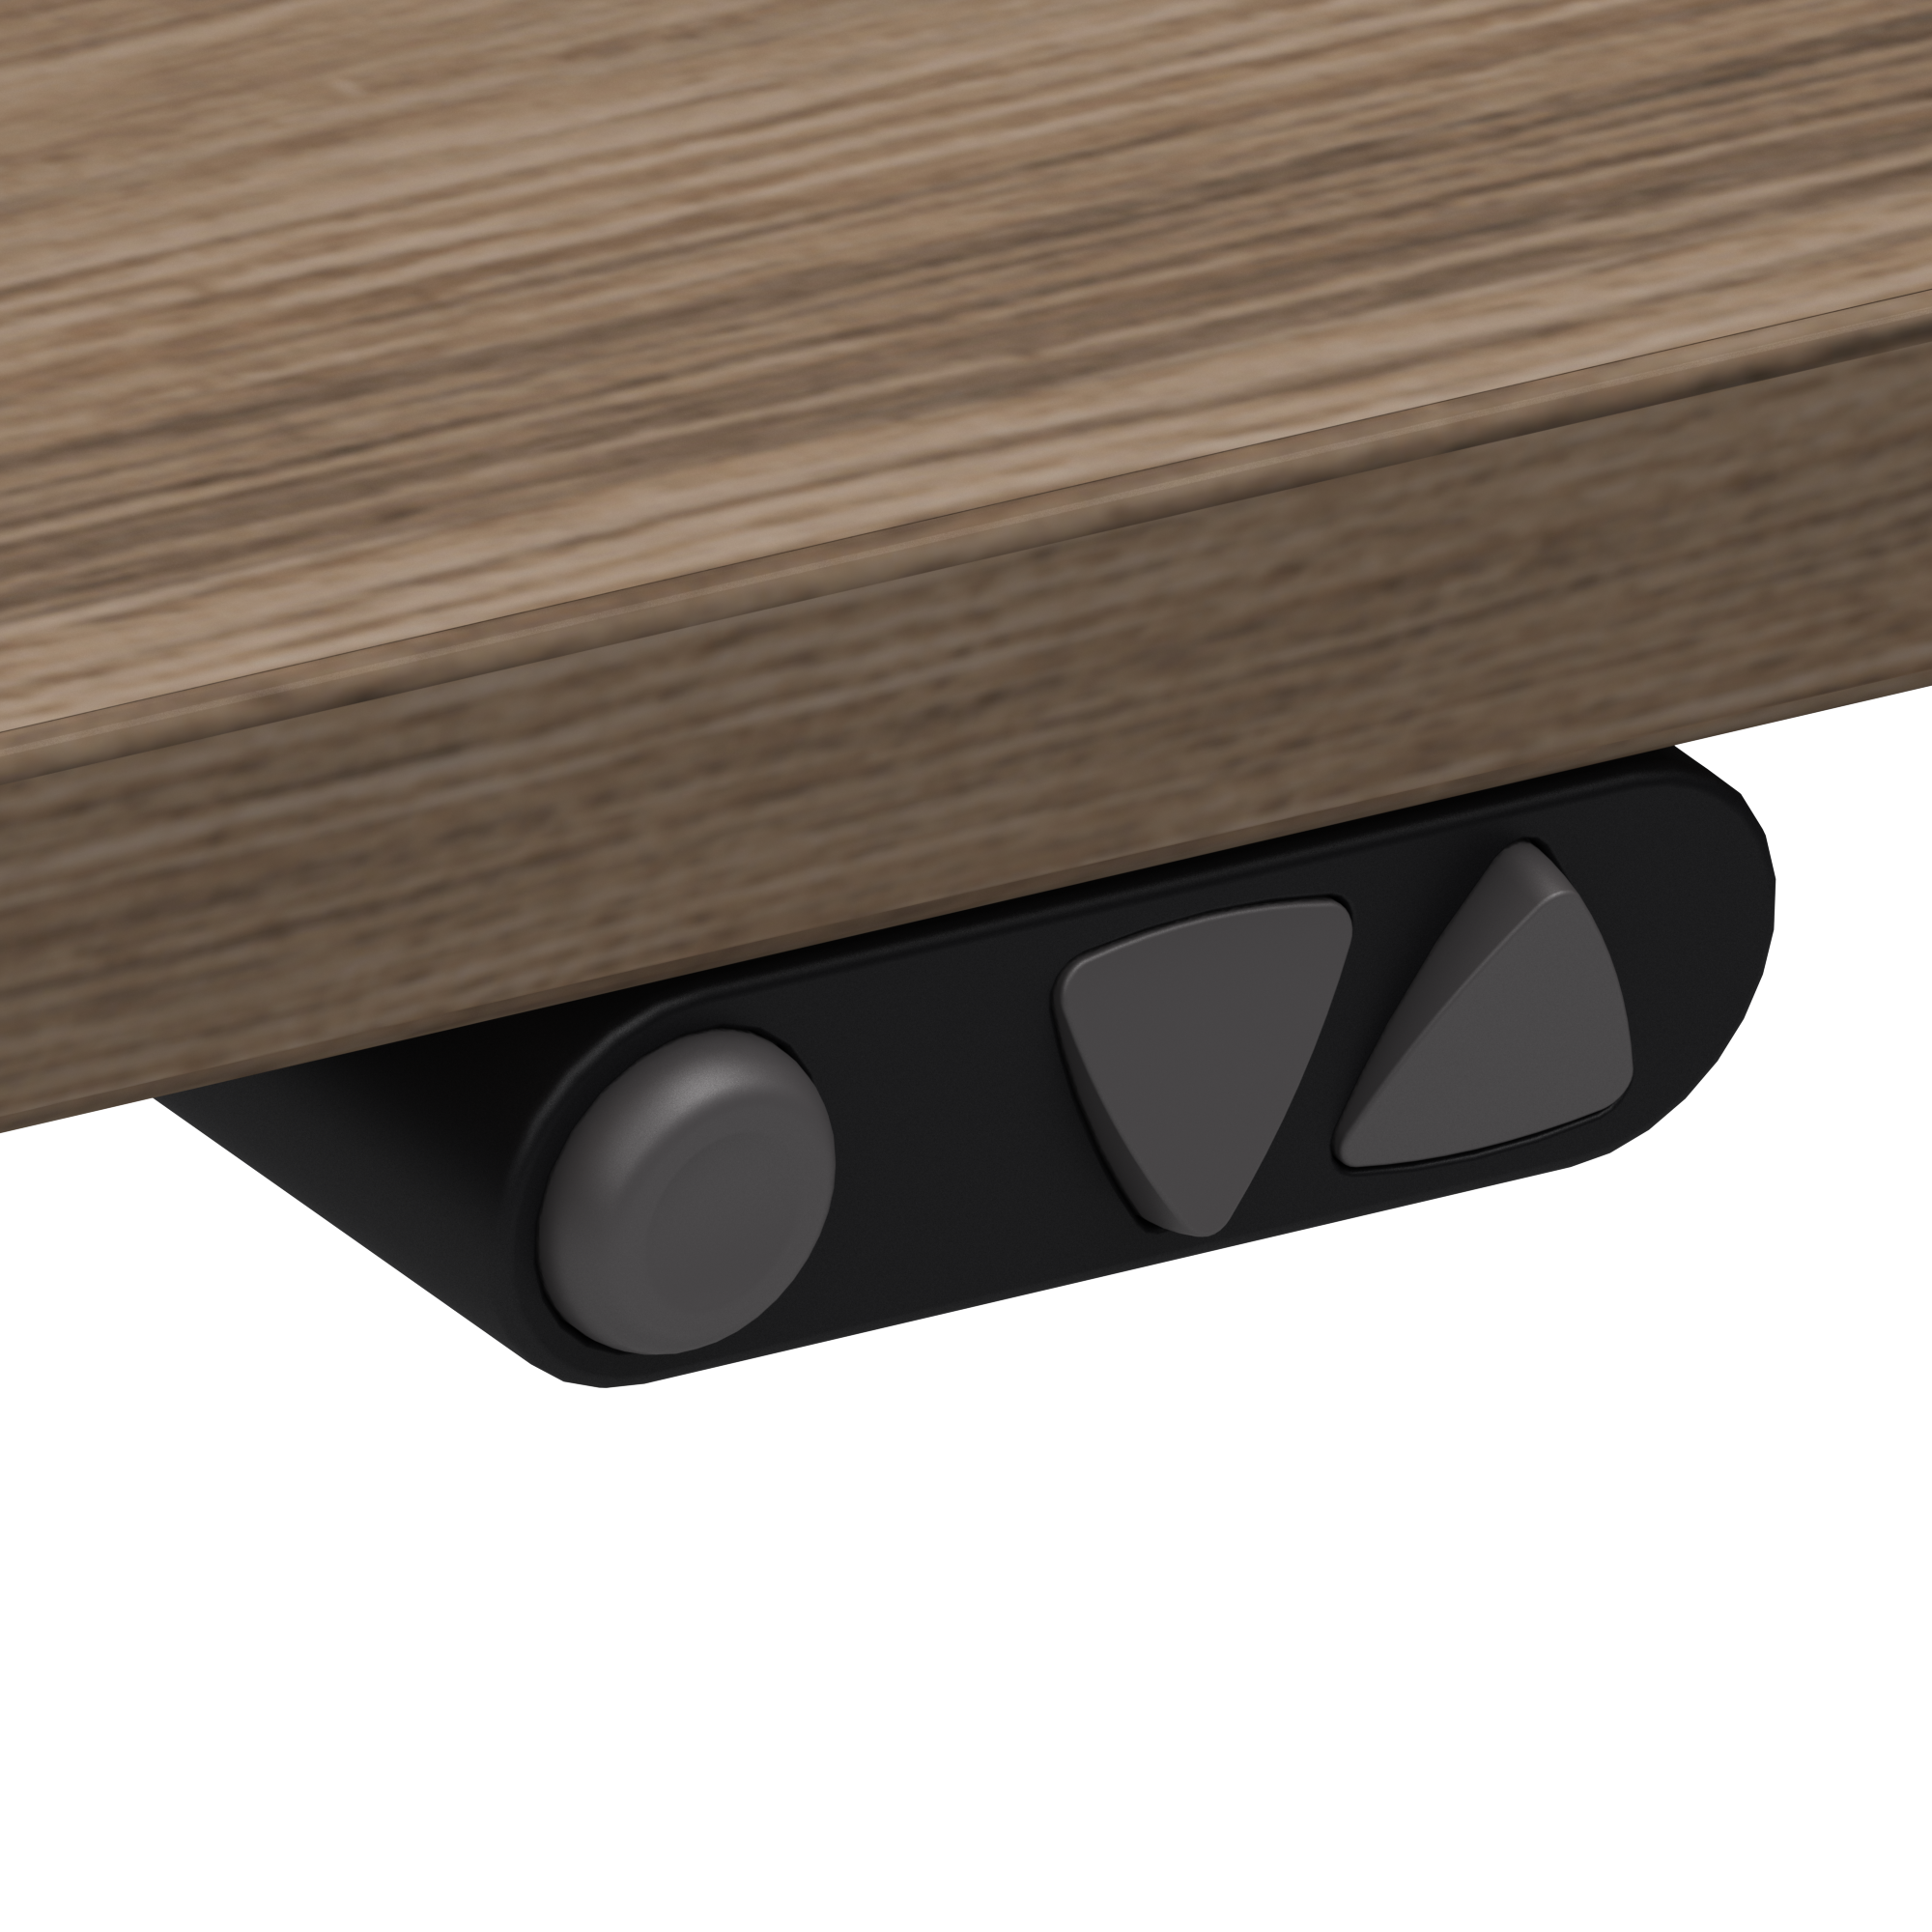 Electric Adjustable Desk | 160x160 cm | Walnut with silver frame